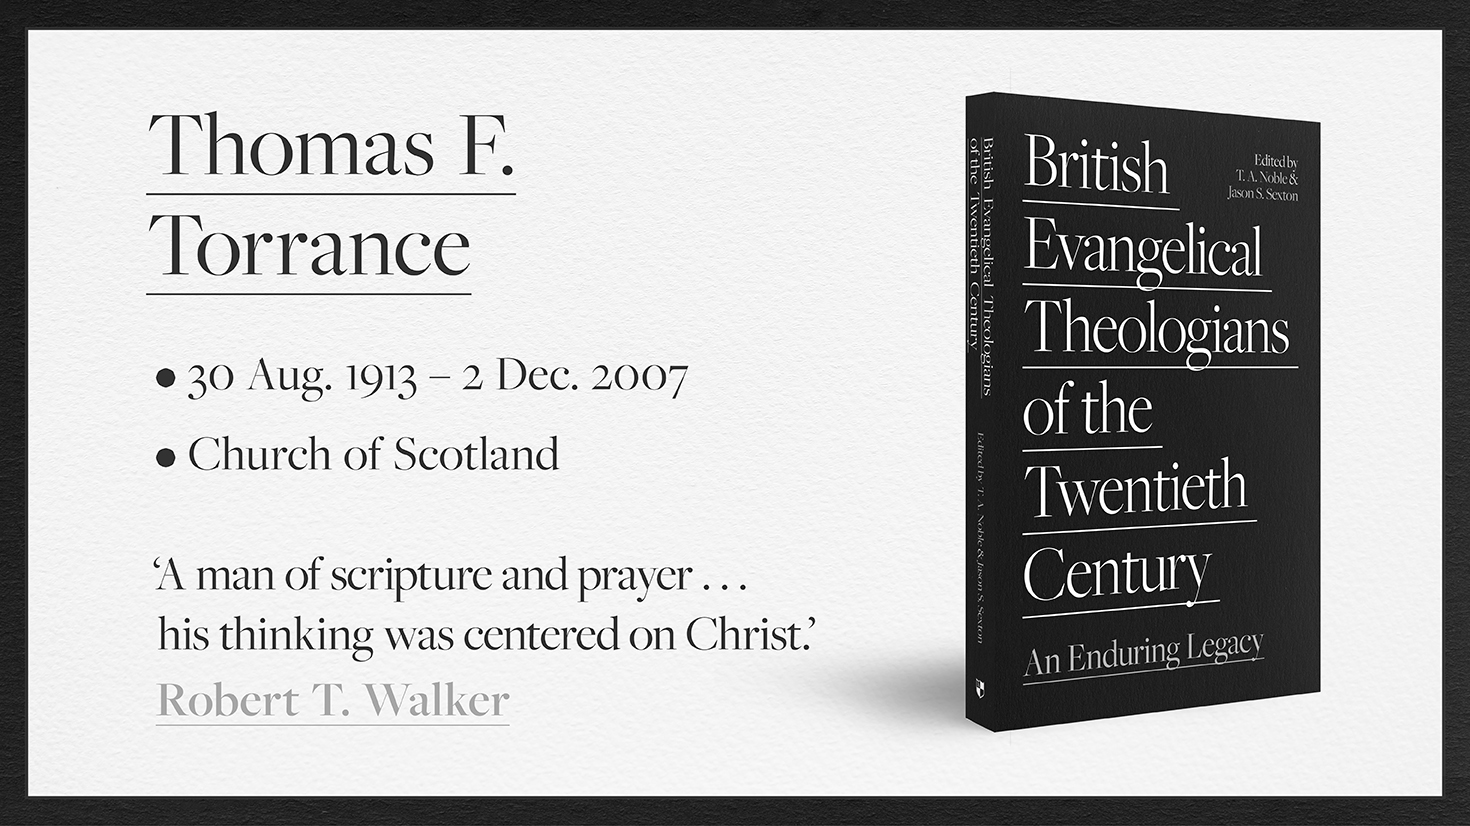 Thomas F. Torrance: British Evangelical Theologian of the Twentieth Century